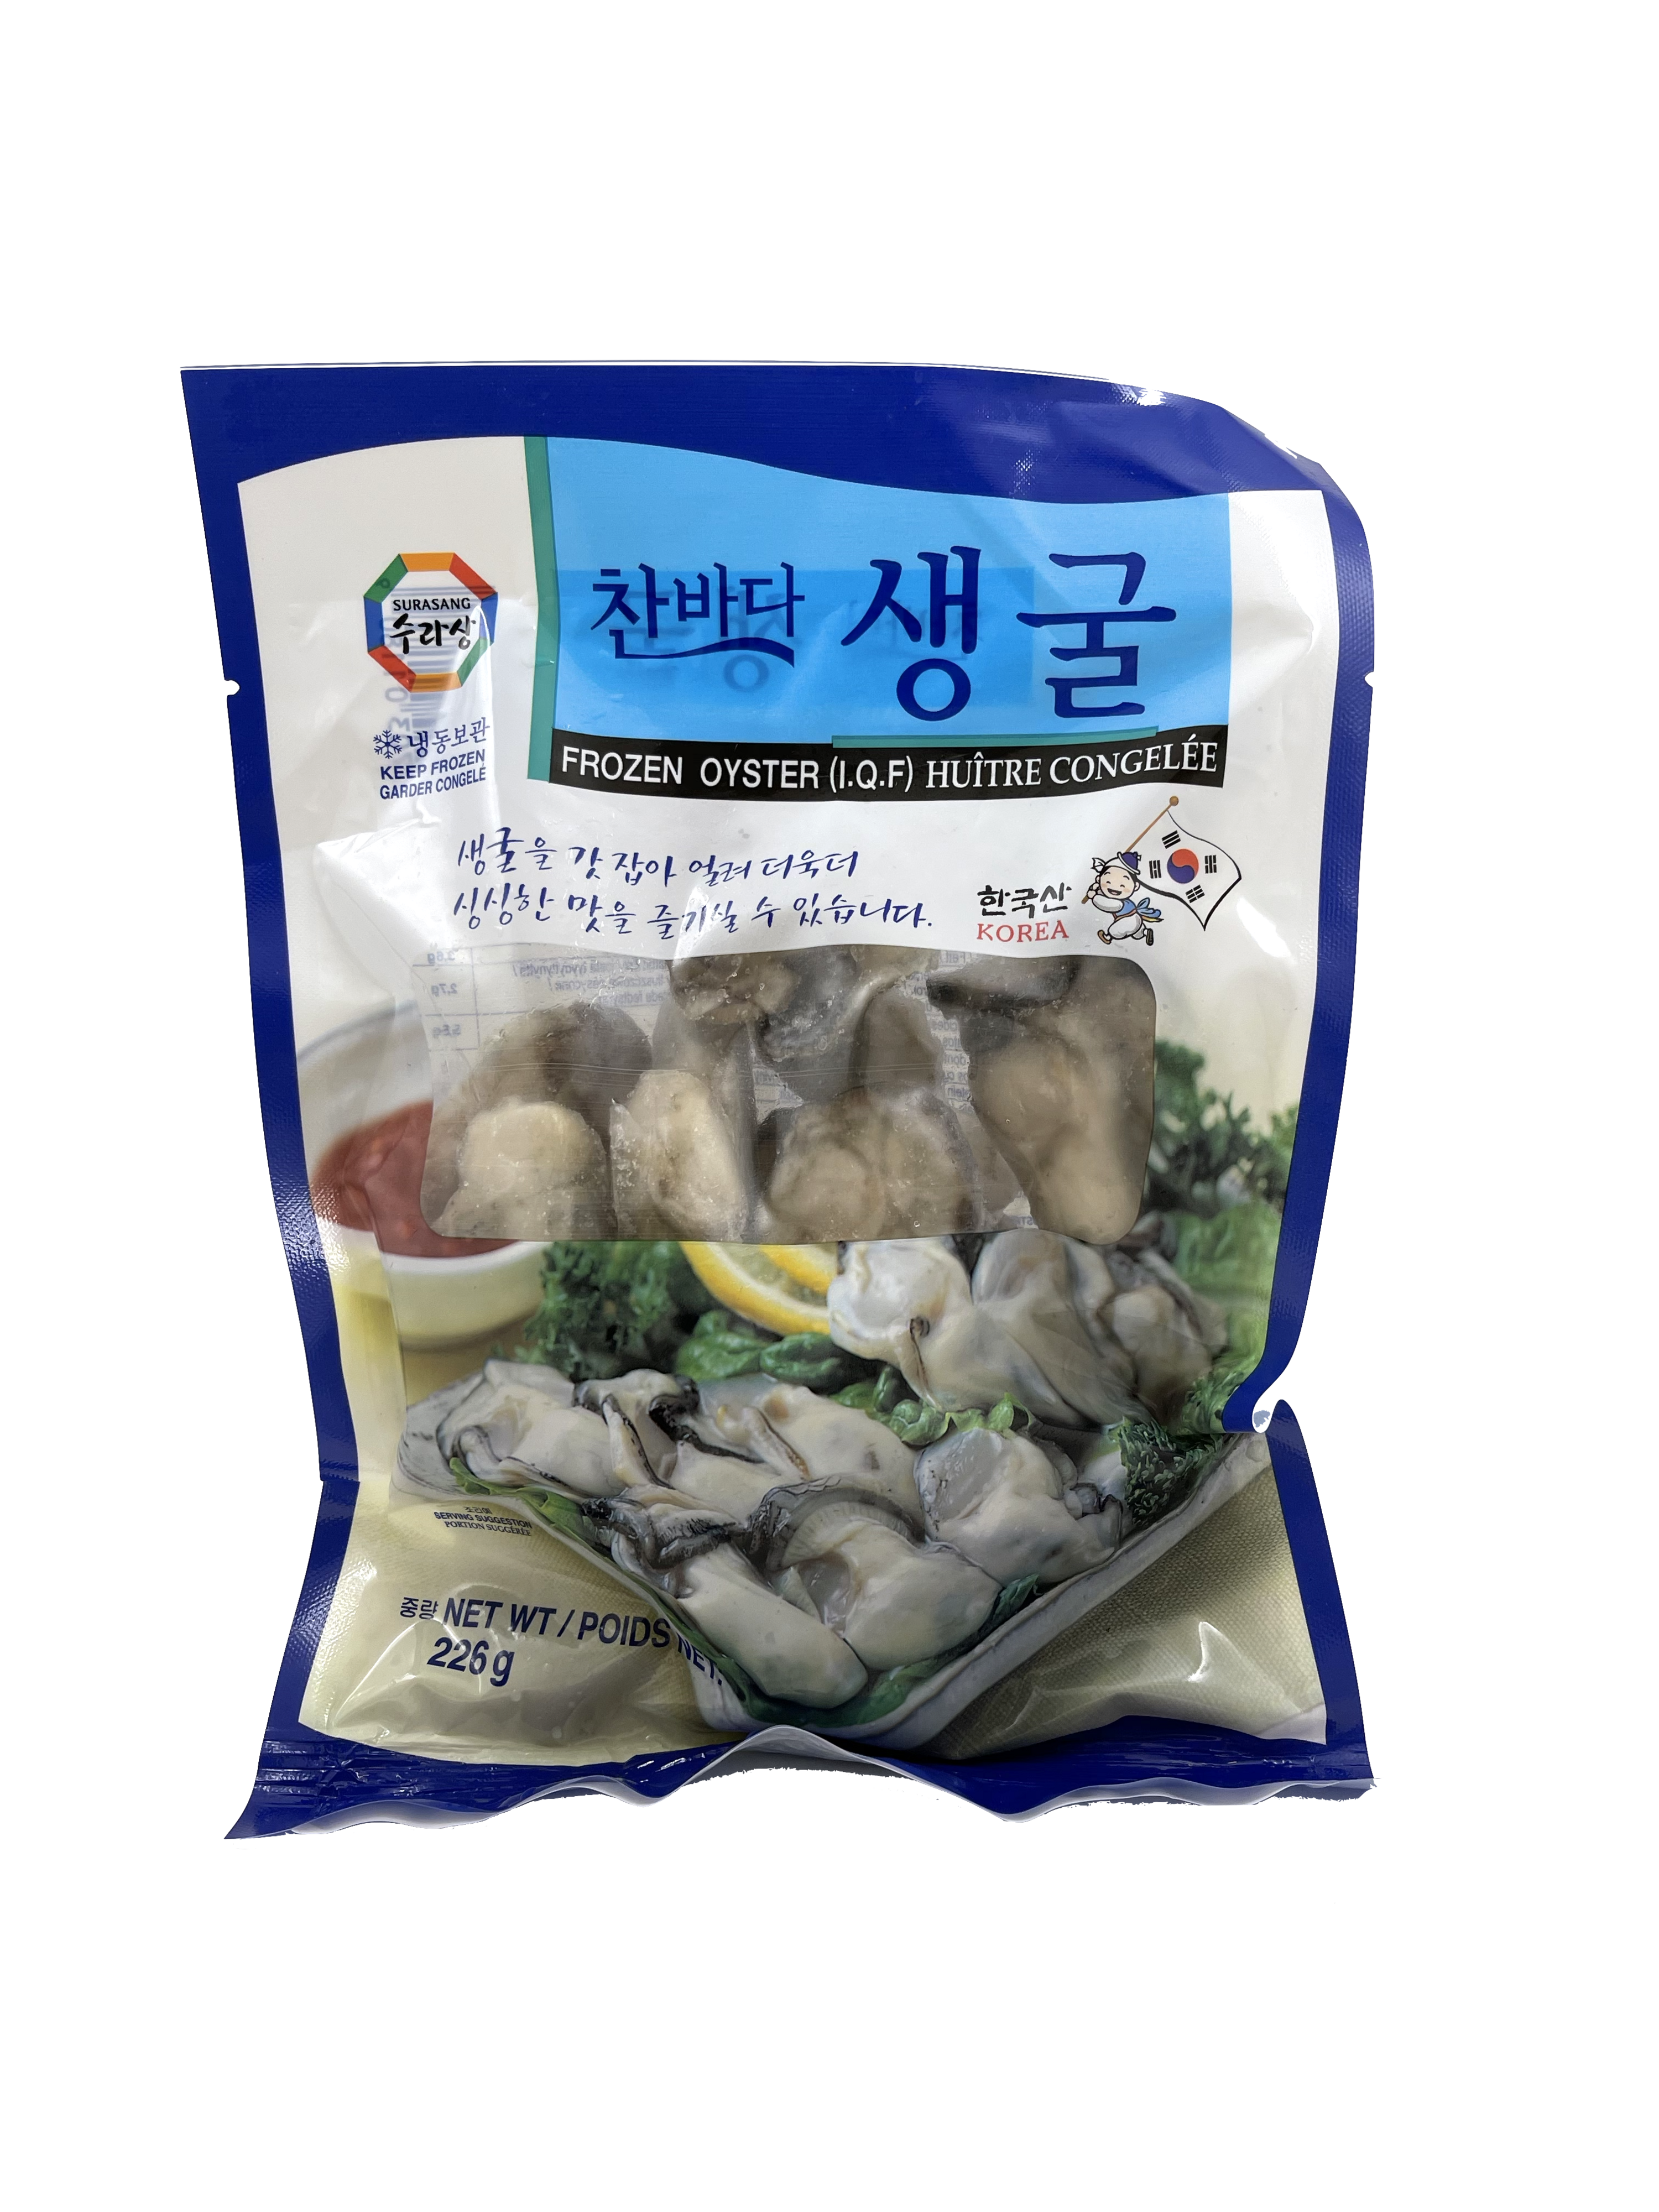 冷冻牡蛎 226g Surasang 韩国